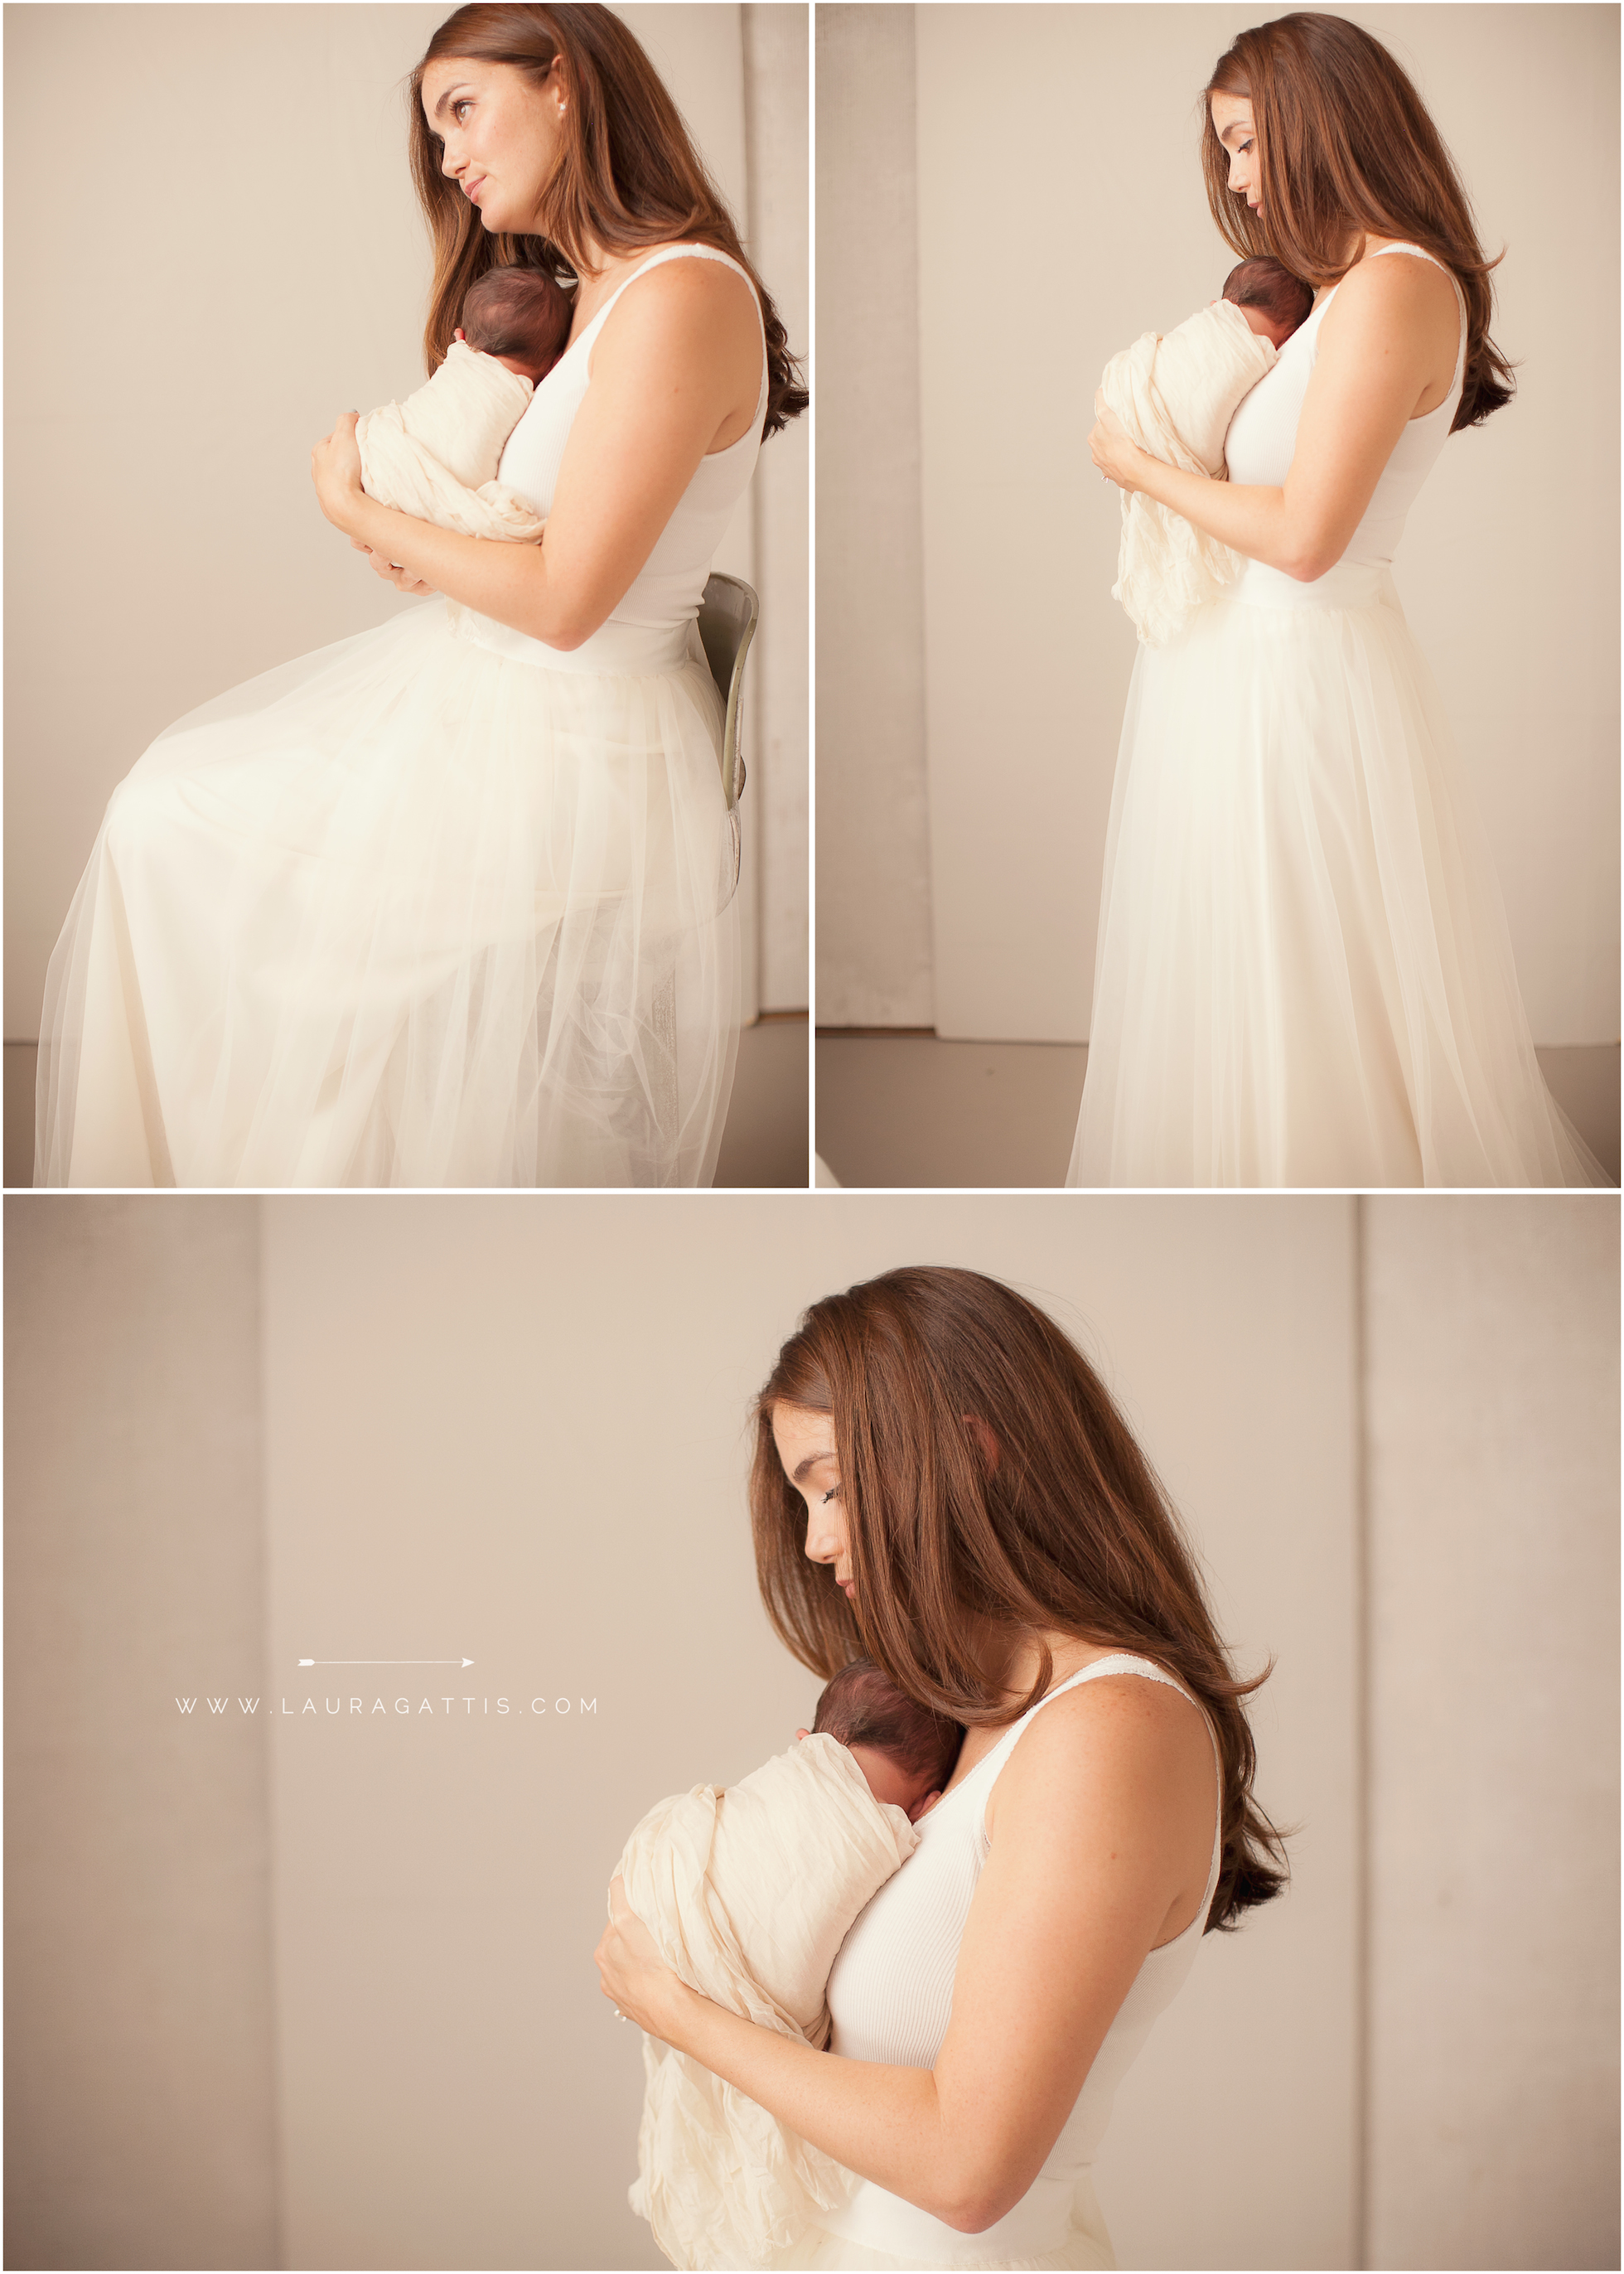 newborn & mother | laura gattis photography | www.lauragattis.com